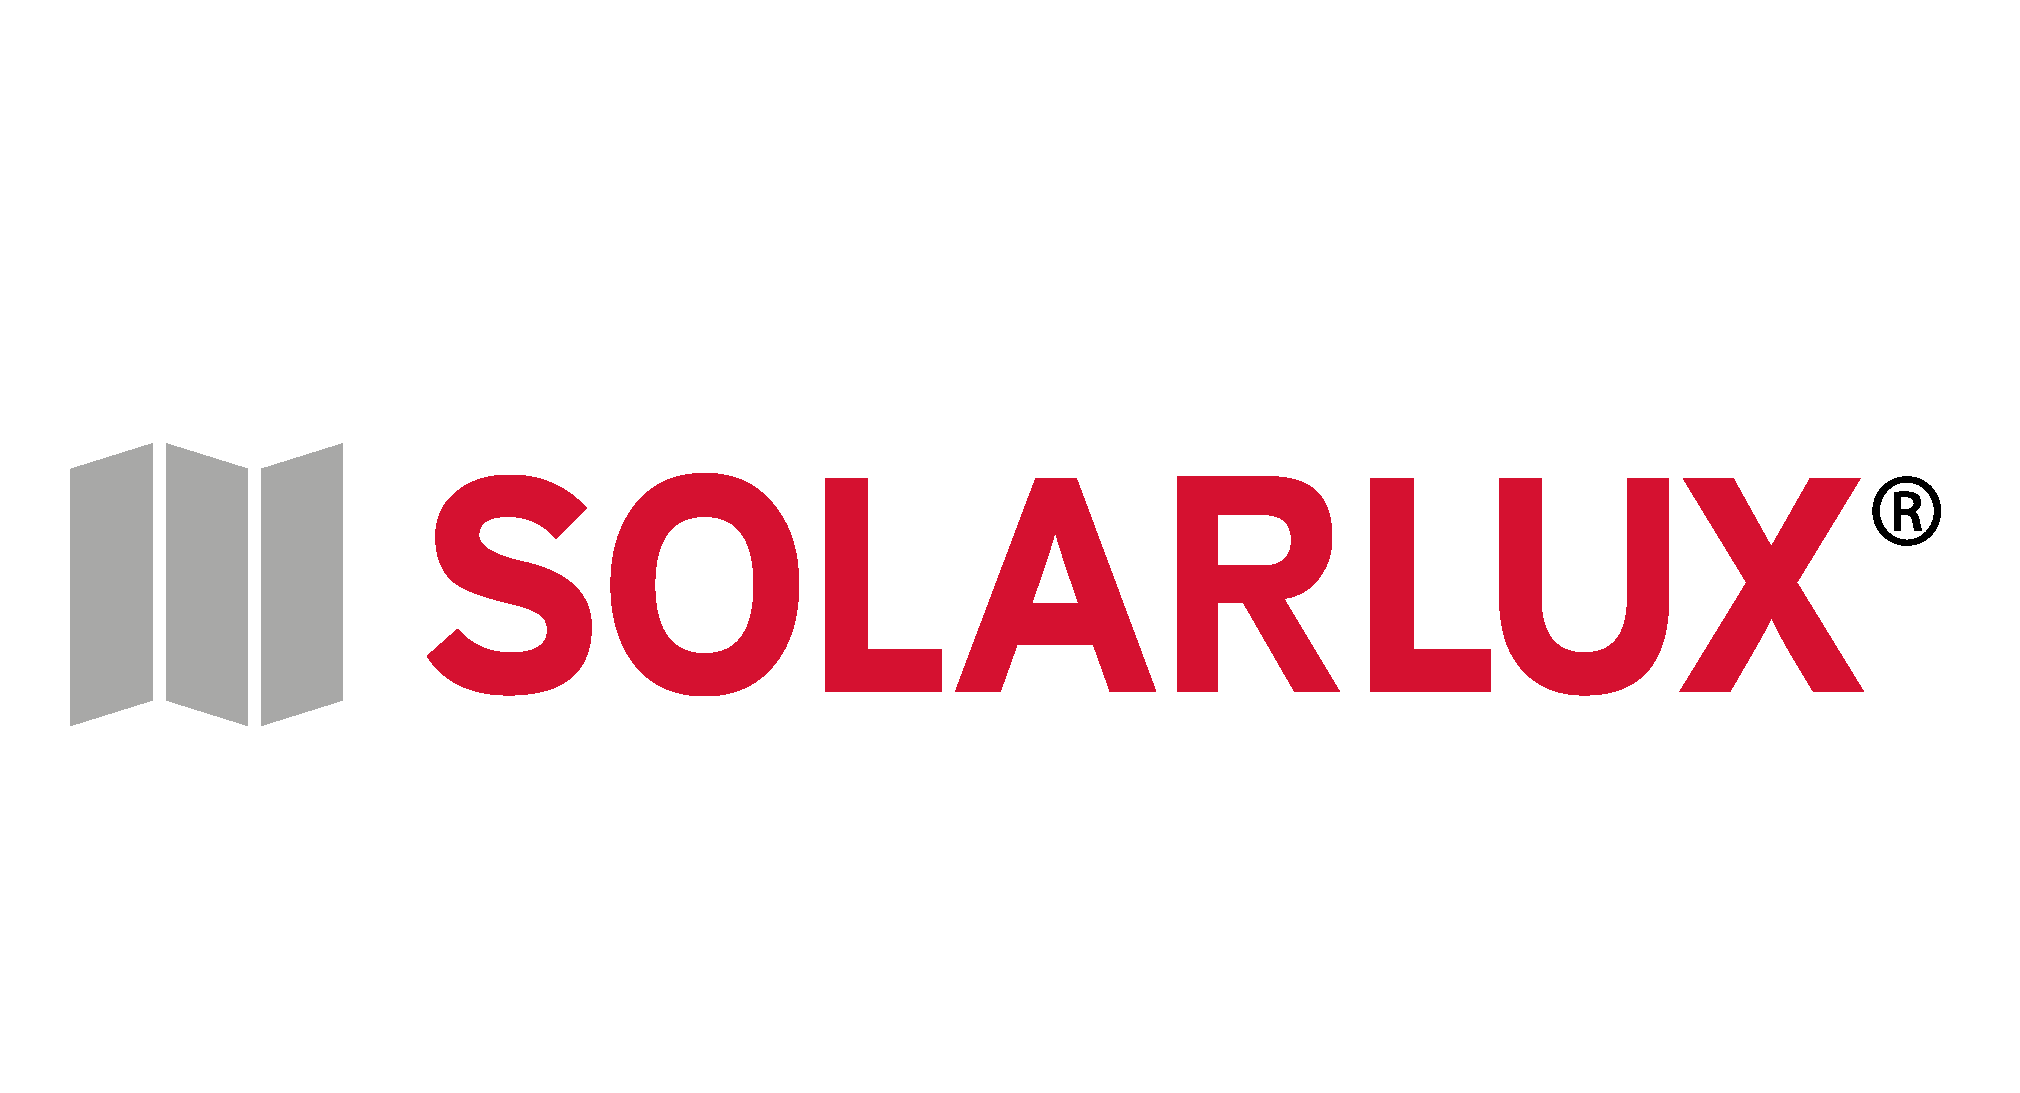 SOLARLUX